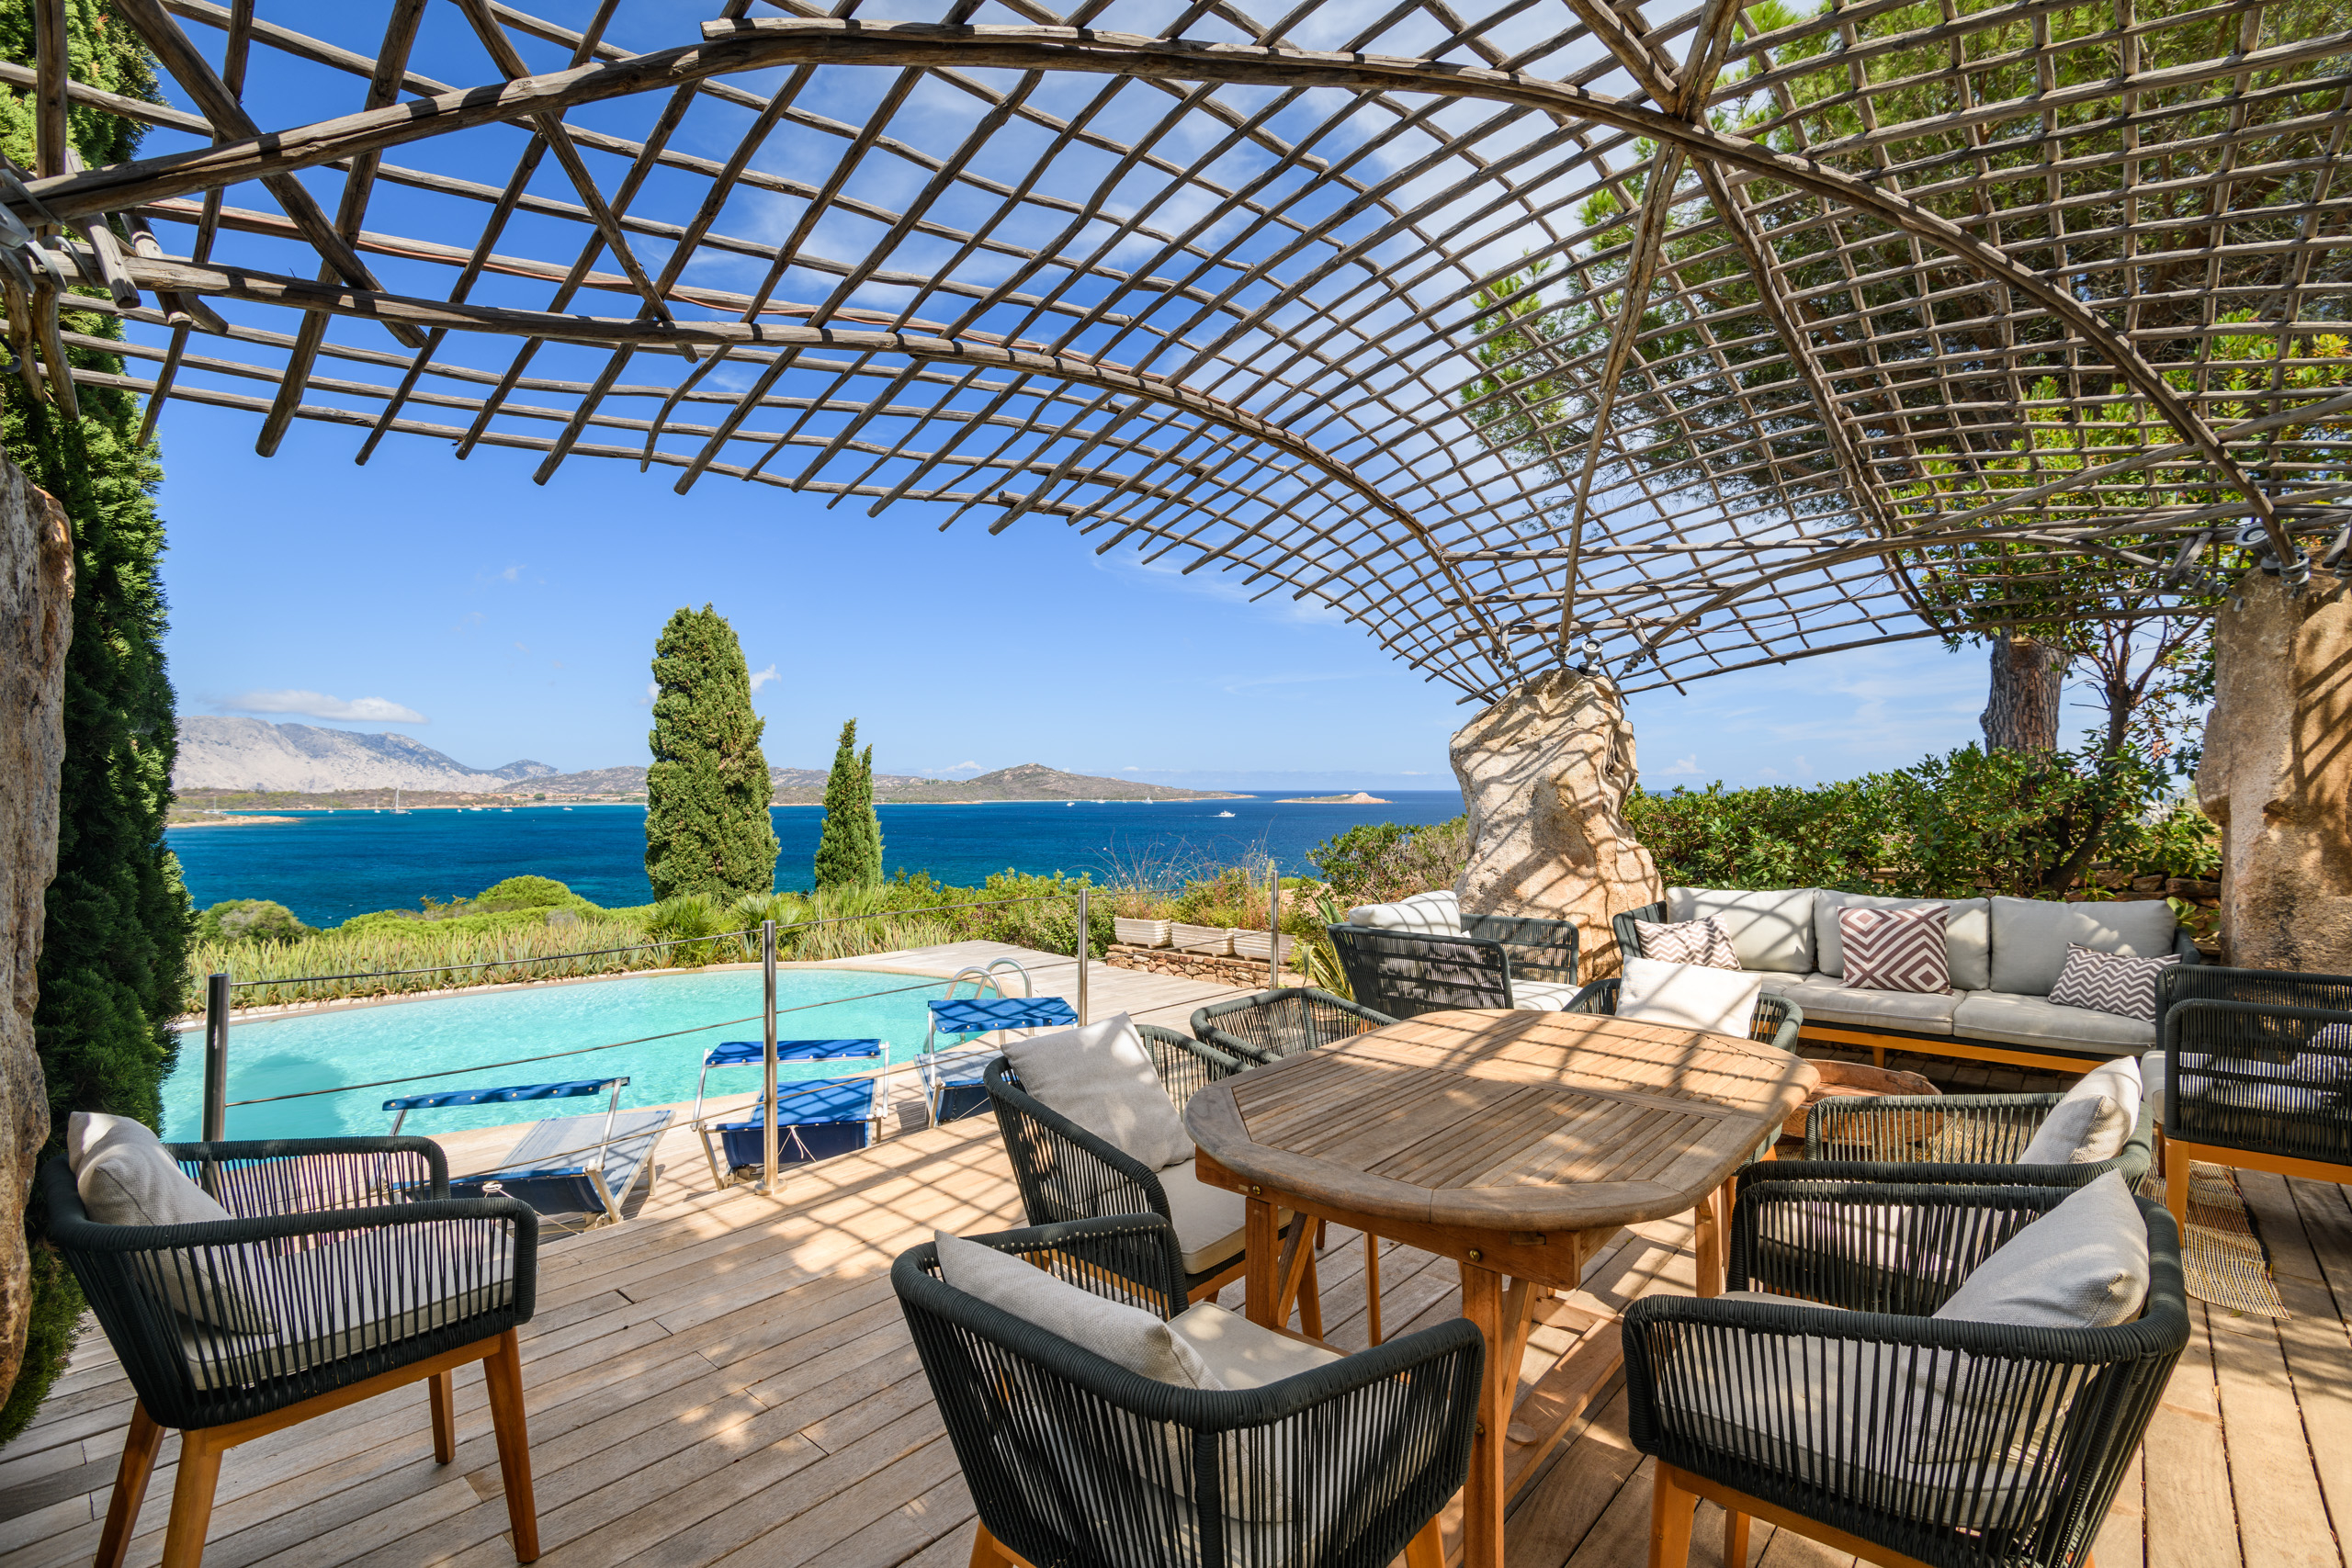 A pool overlooks the sea in Sardinia